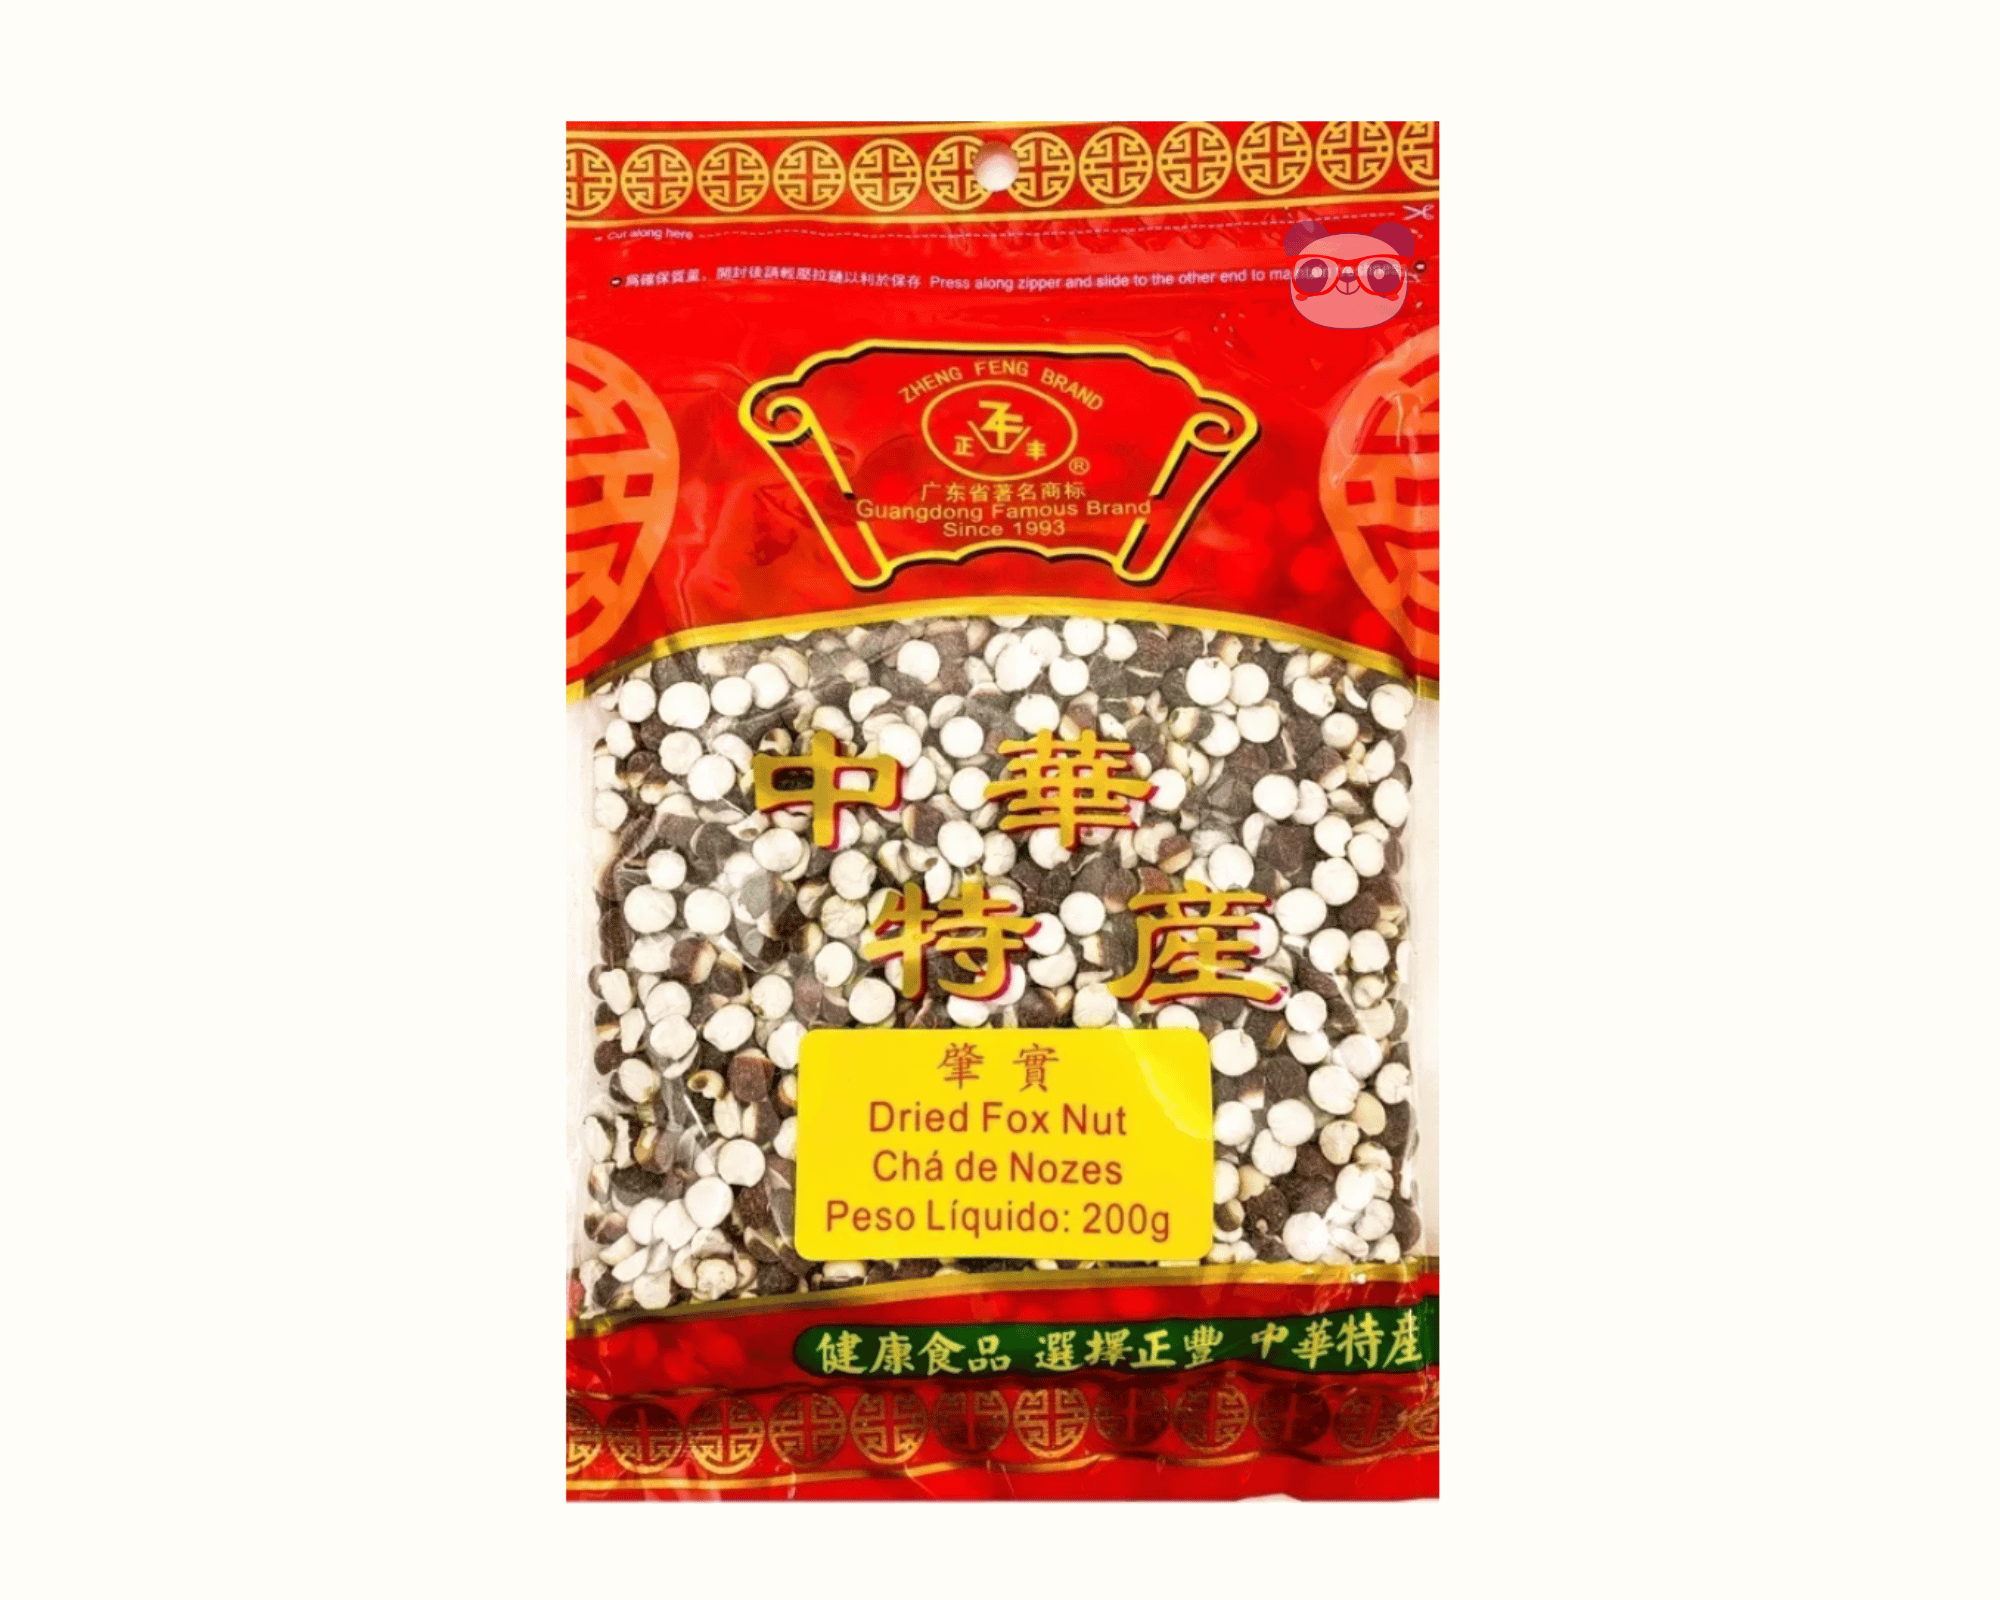 Chá De Nozes (dried Fox Nut) - Zheng Feng Brand 200g